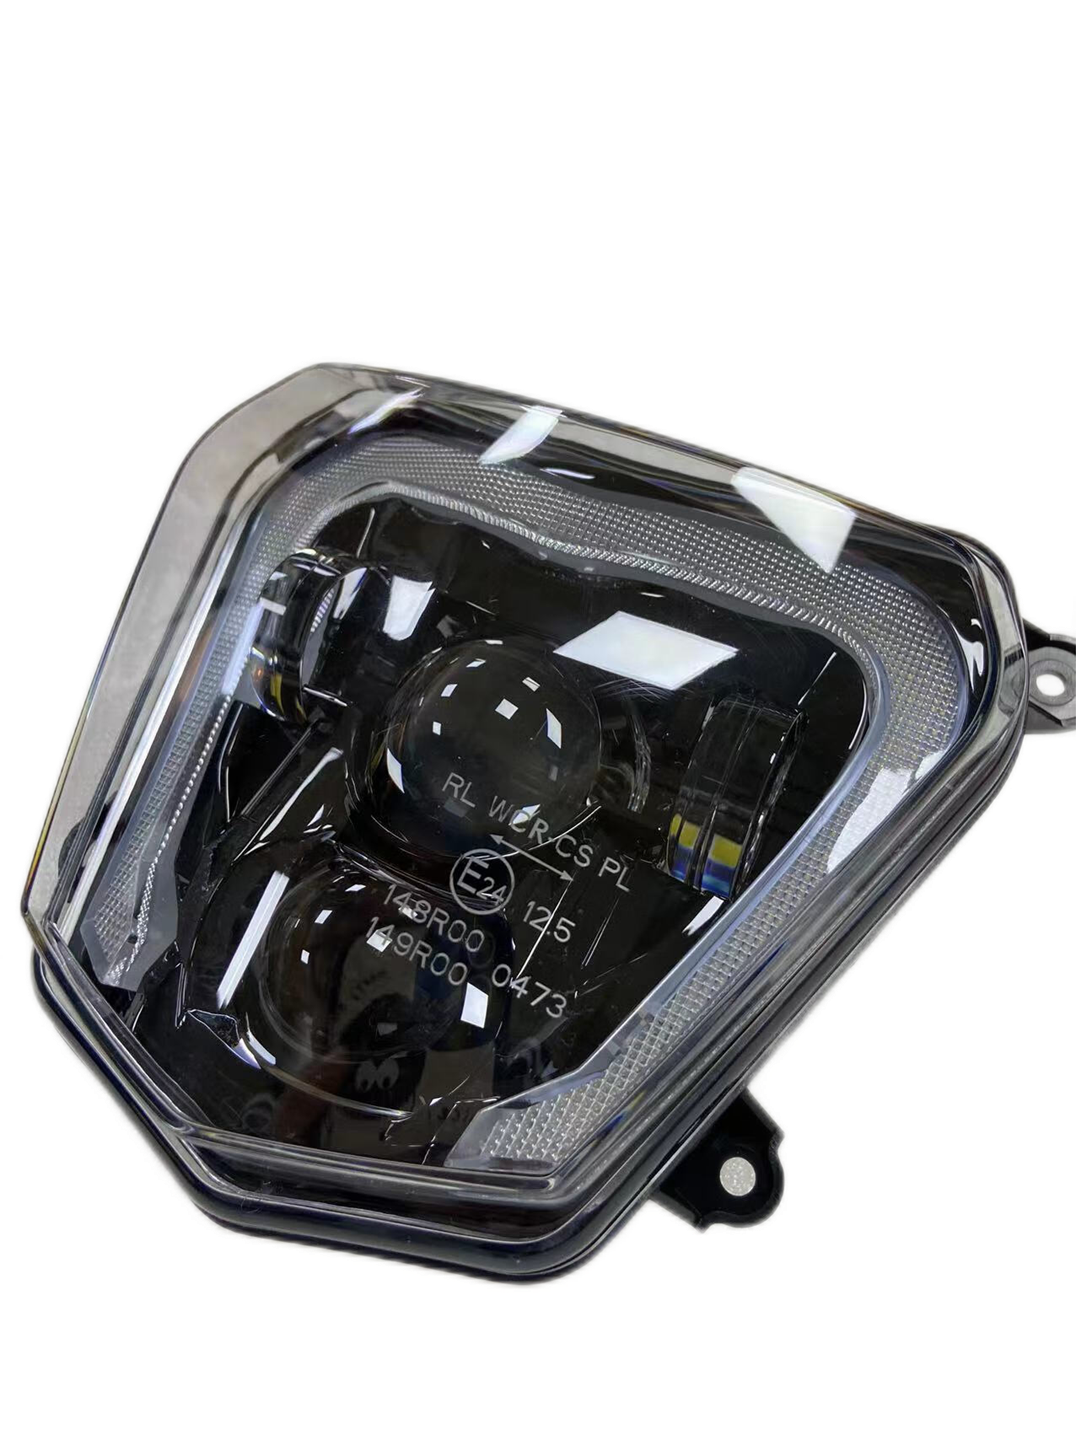 E24 Led motorcycle headlight with DRL for KTM Duke 690 2012